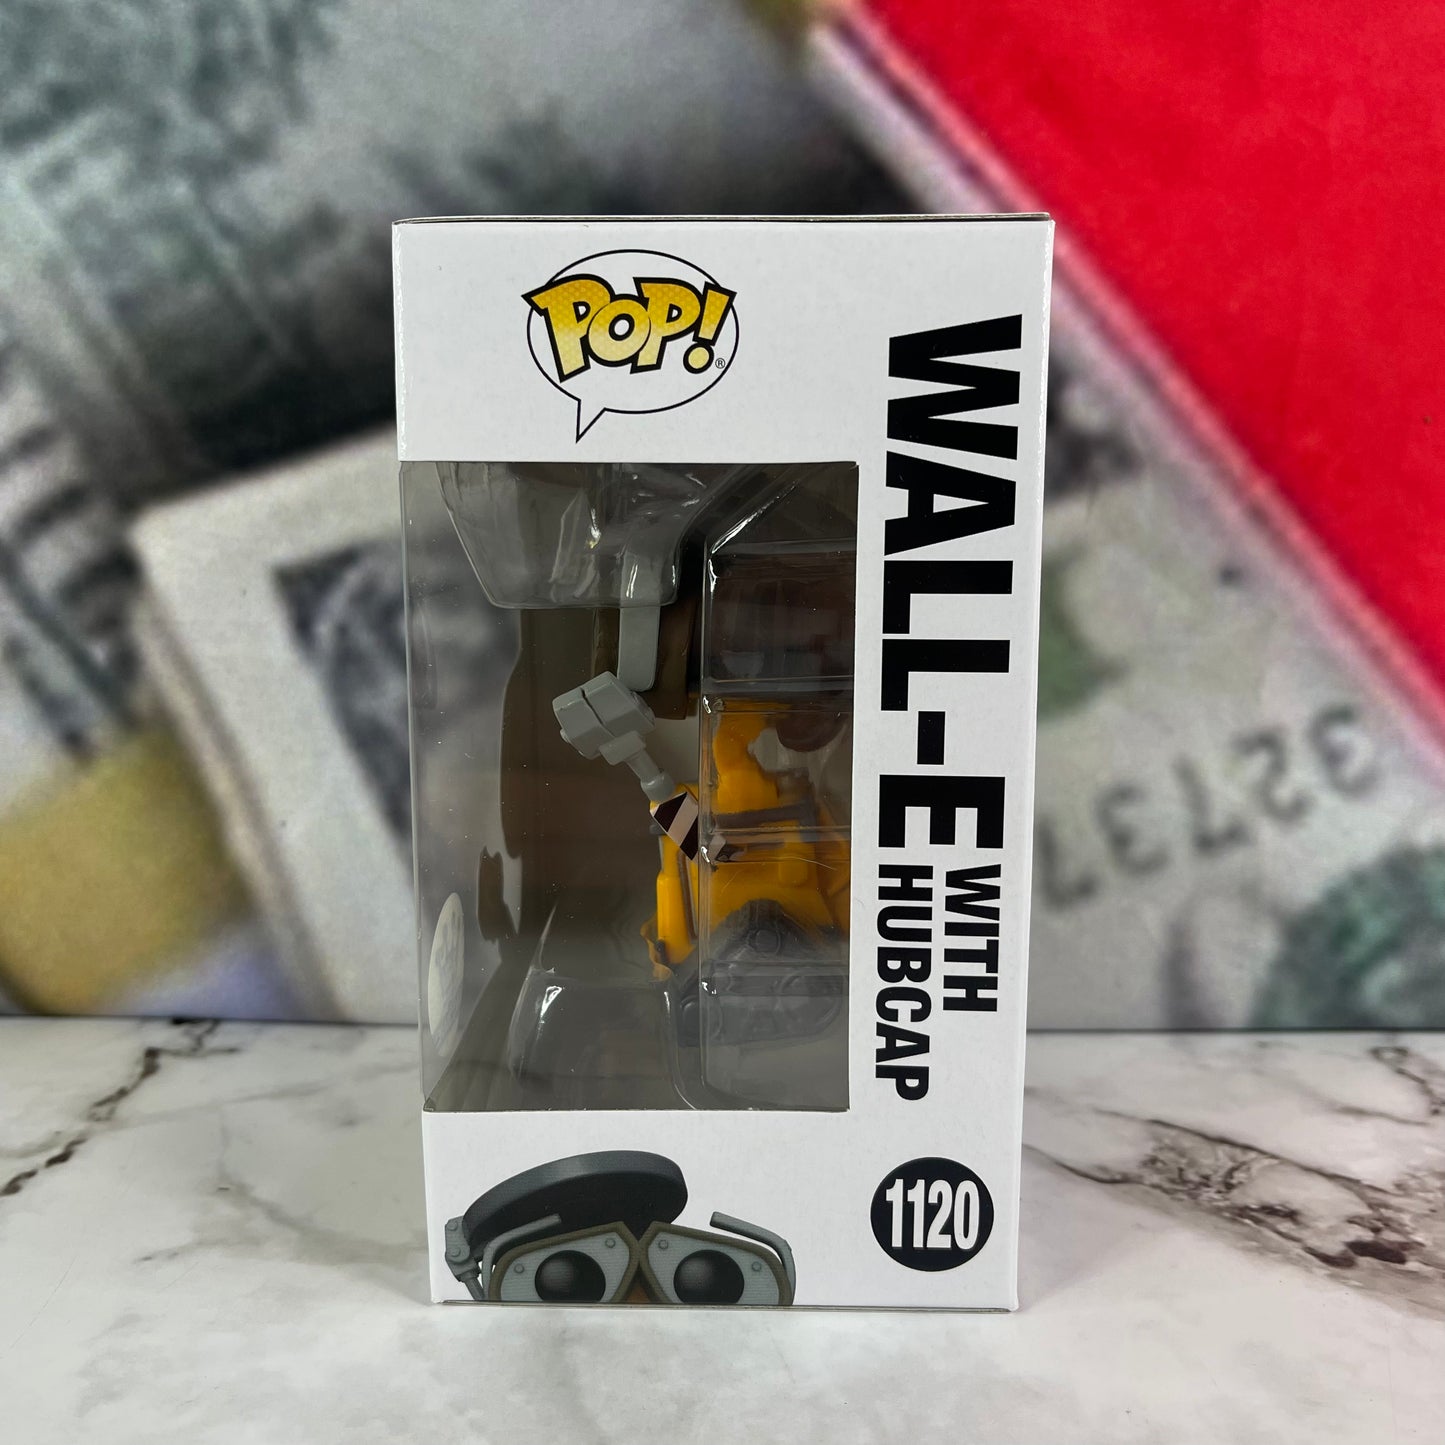 Wall-E Funko Pop! Wall-E (with Hubcap) #1120